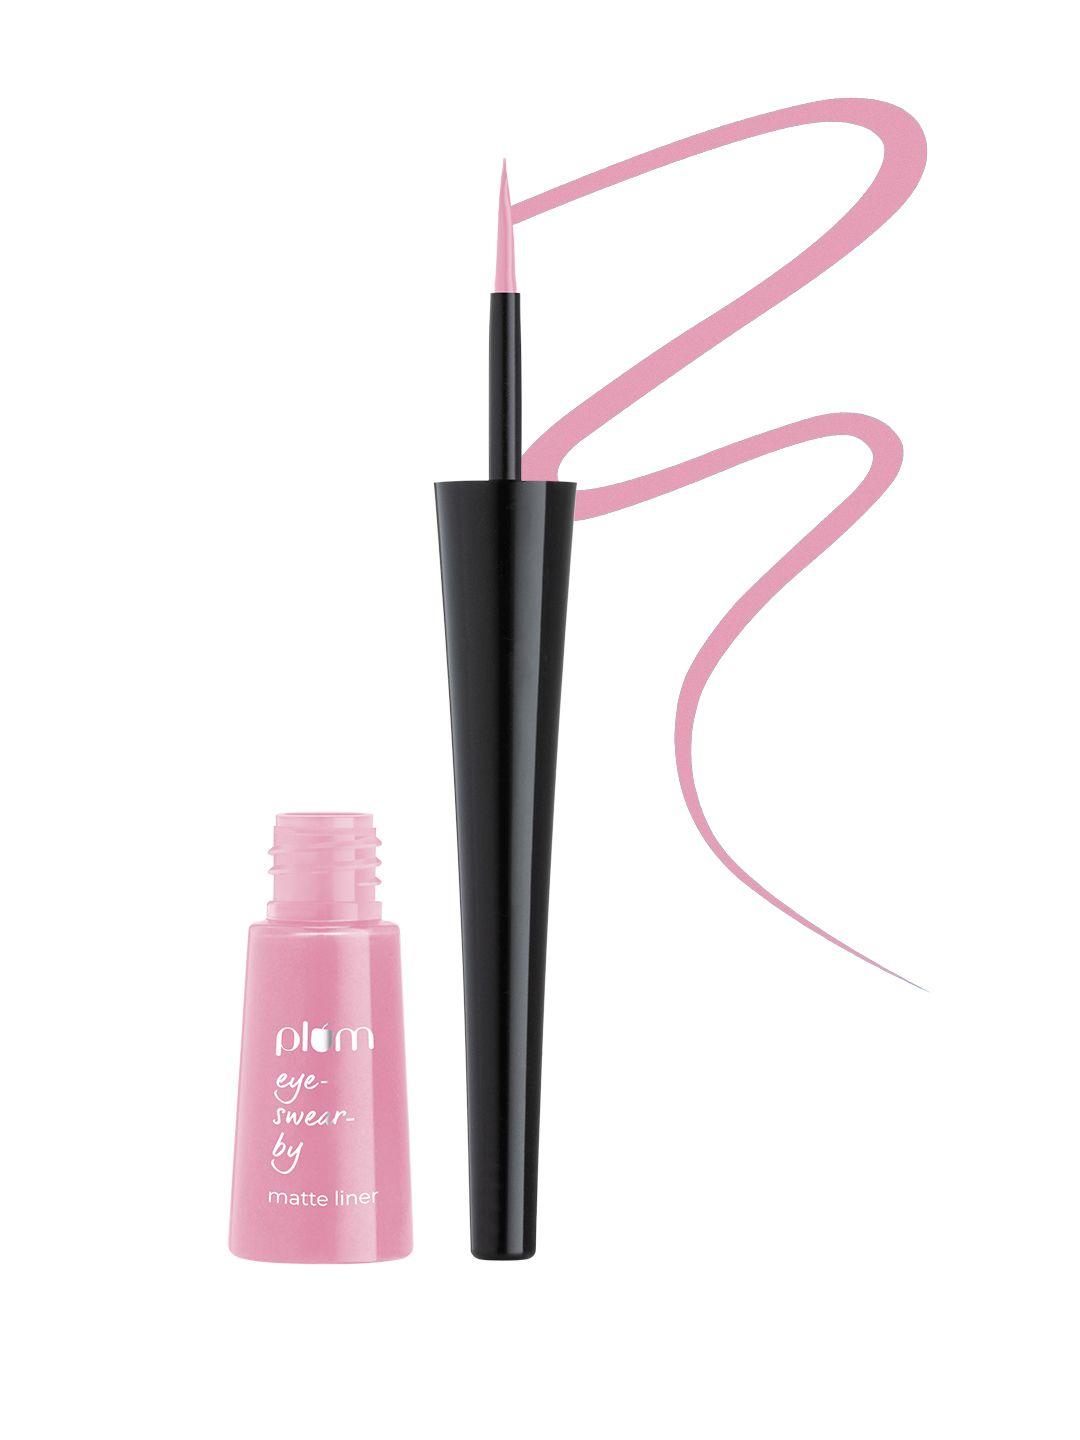 plum water-proof & vegan eye swear matte eye liner with argan oil 3 ml - cloud pink 07